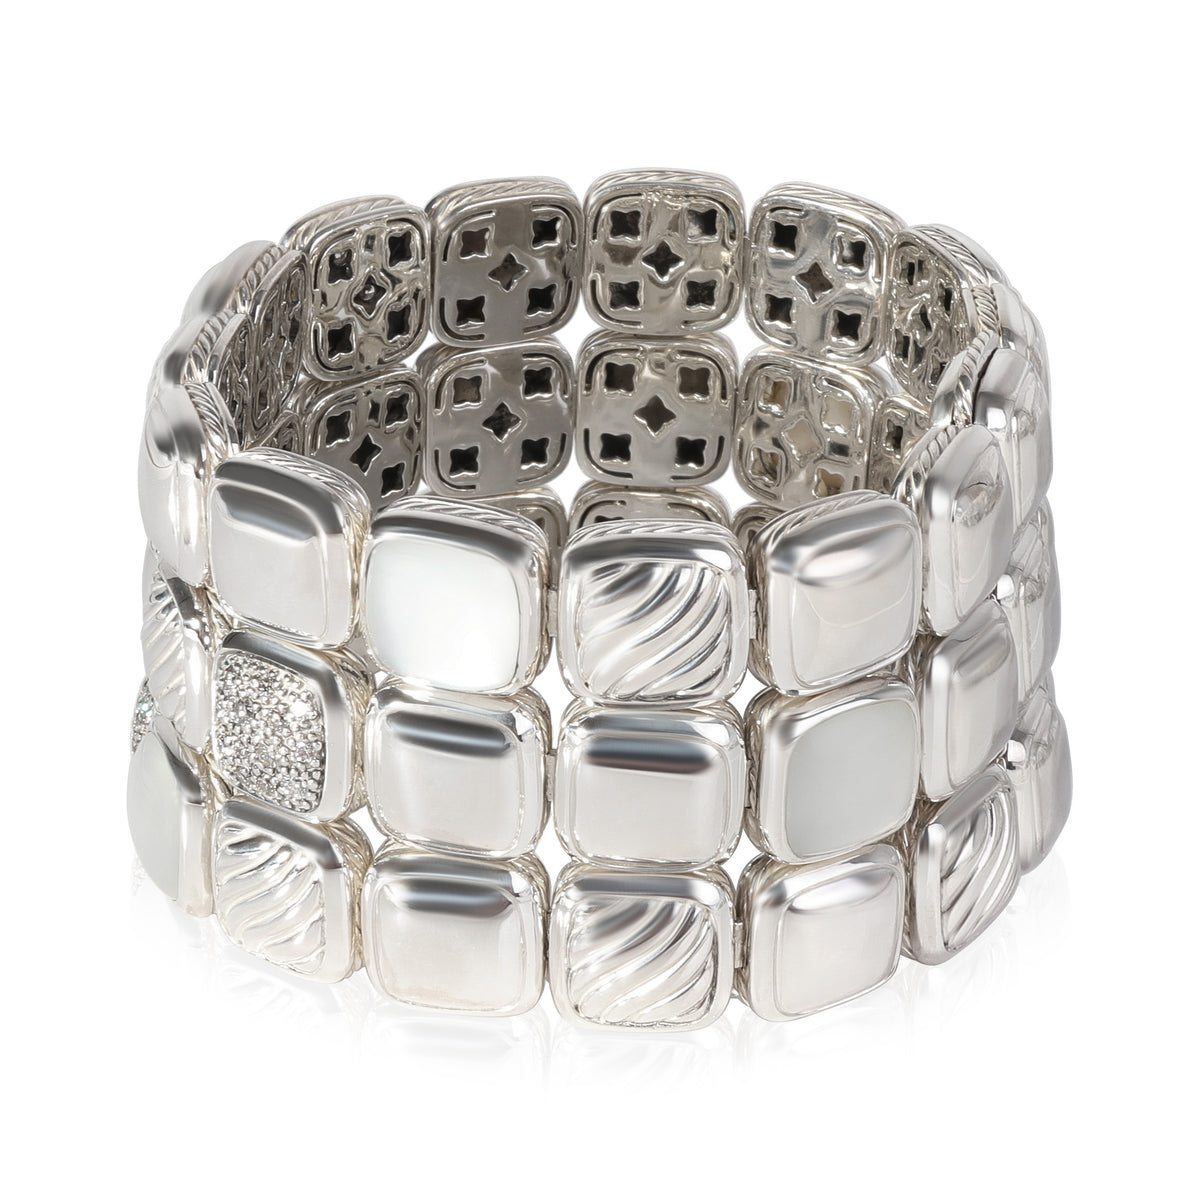 David Yurman Chiclet Moonstone Diamond Bracelet in Sterling Silver (0.53 ctw)